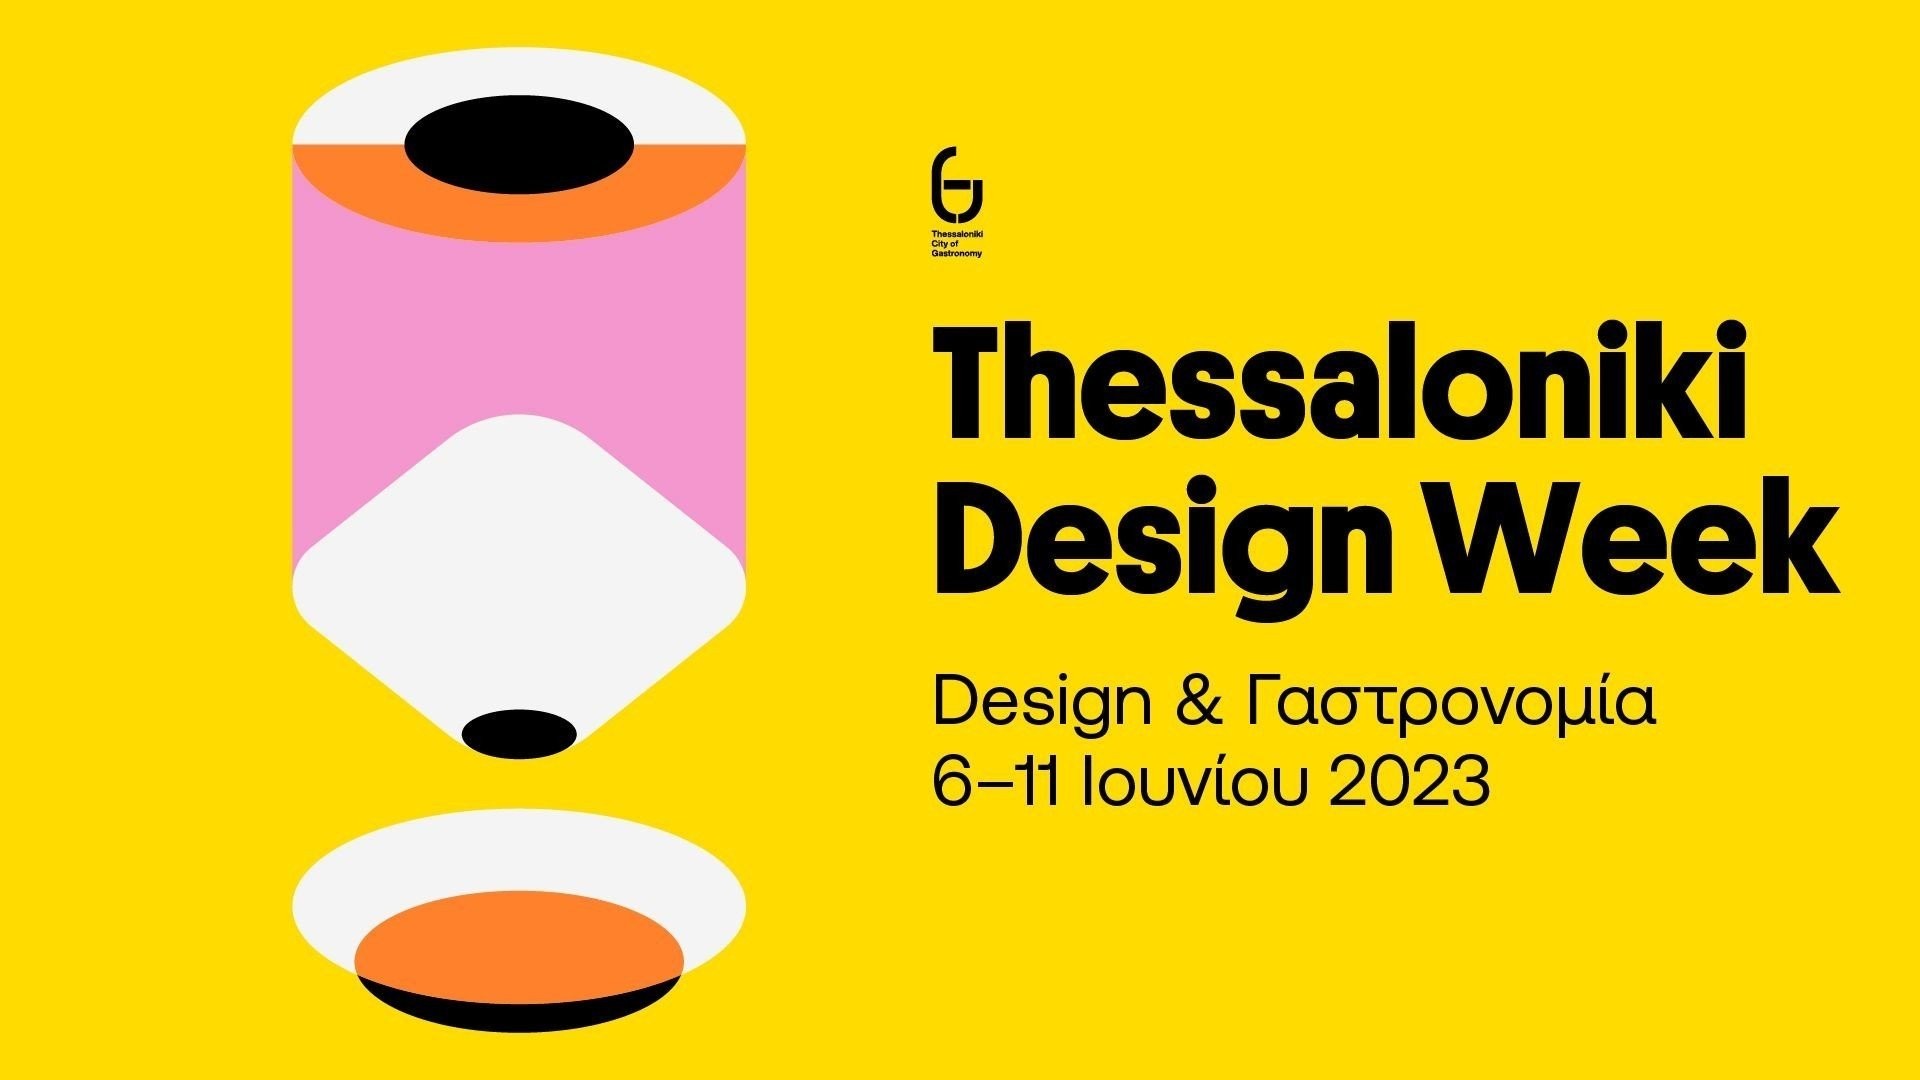 thessaloniki-design-week-logo-yvXms.jpg